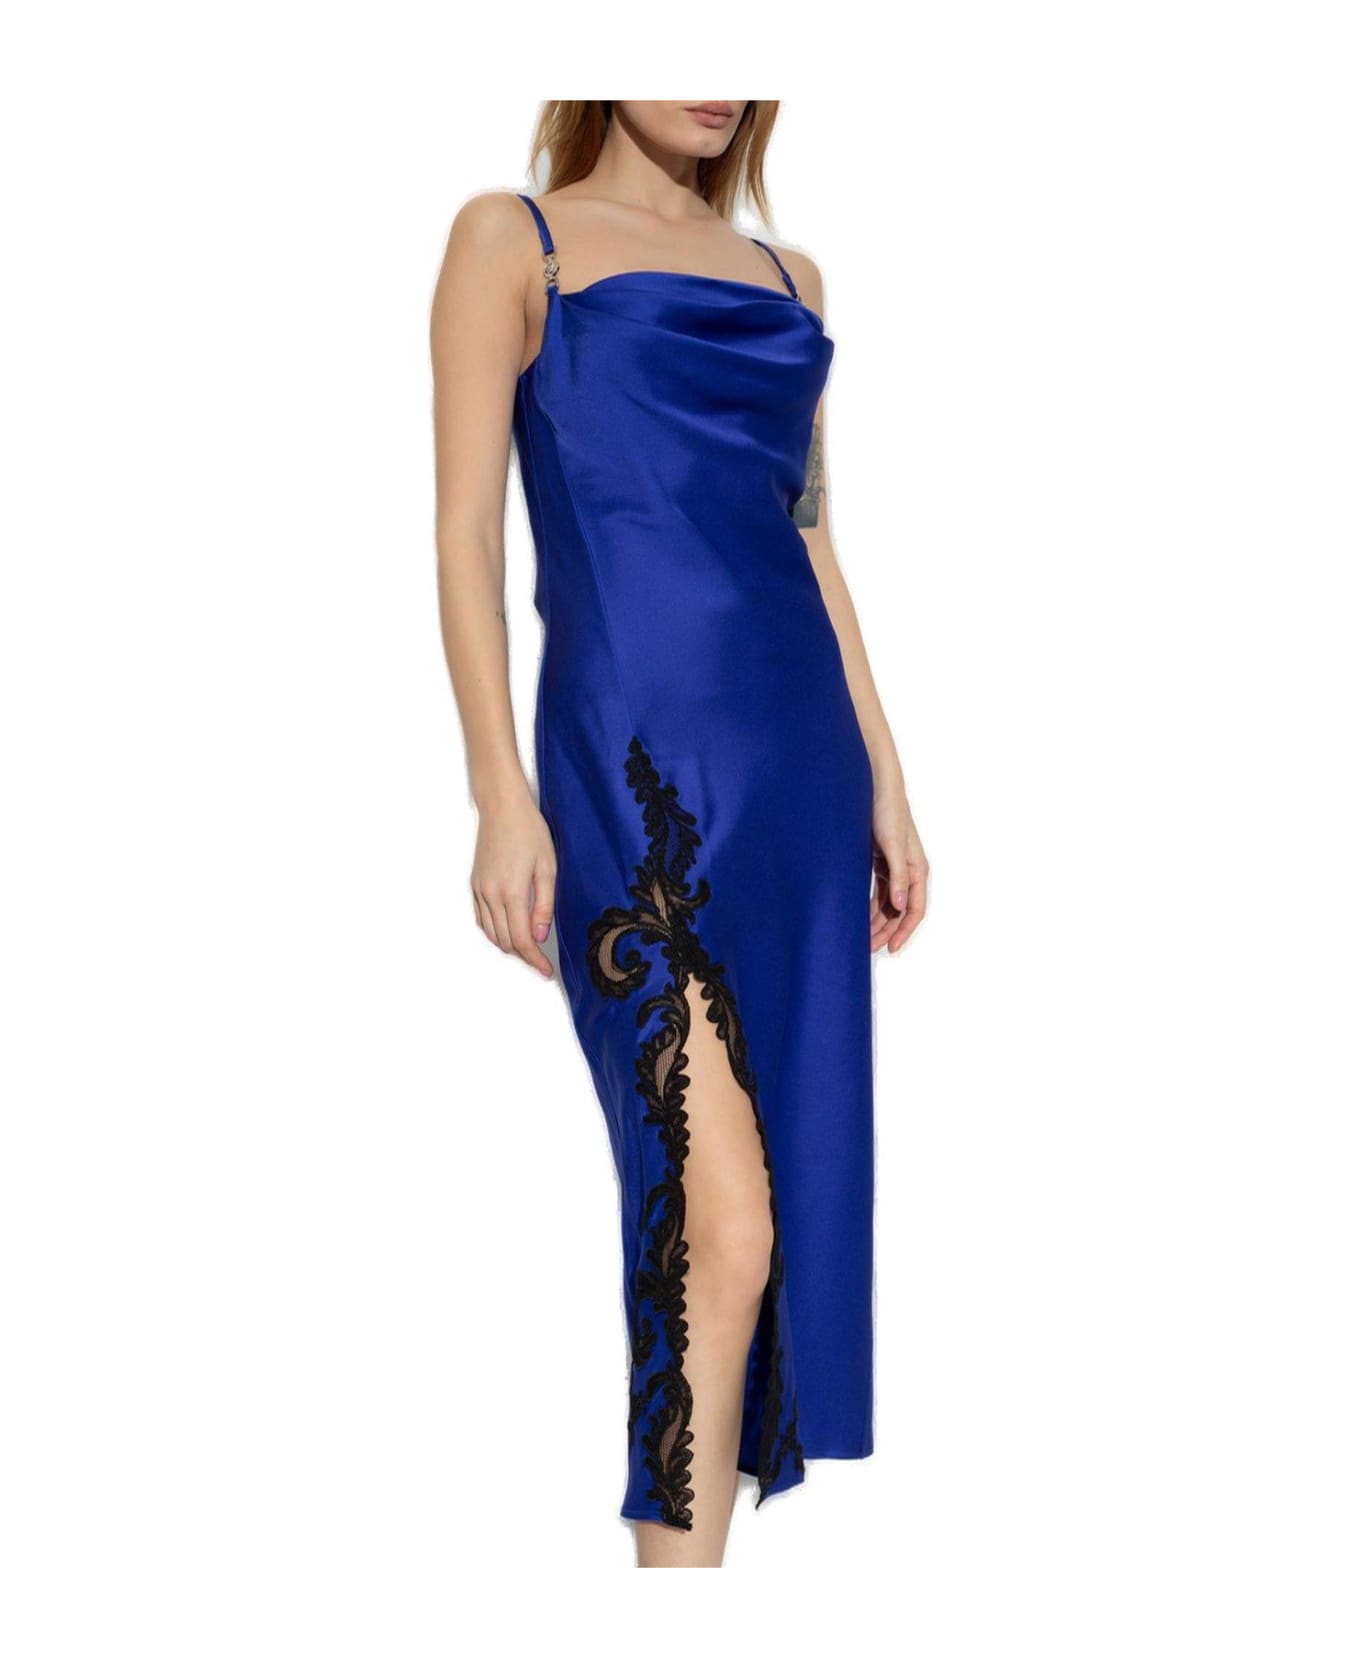 Versace Lace-detailed Sleeveless Dress - Sapphire